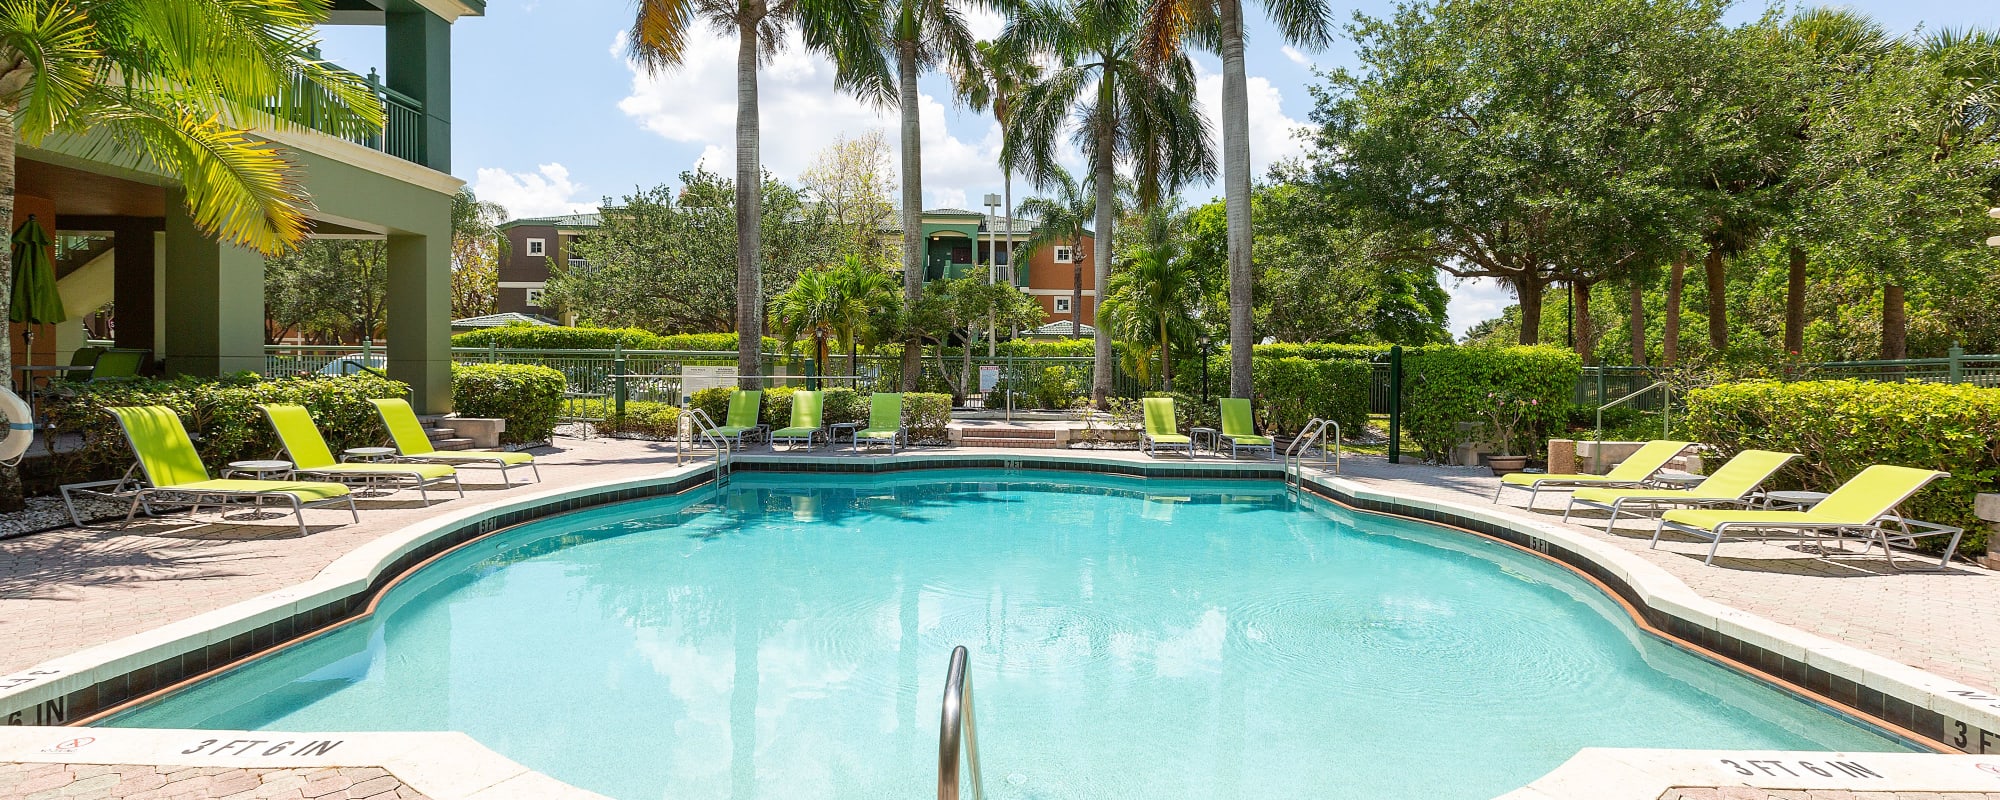 Photos of Club Mira Lago Apartments in Coral Springs, Florida